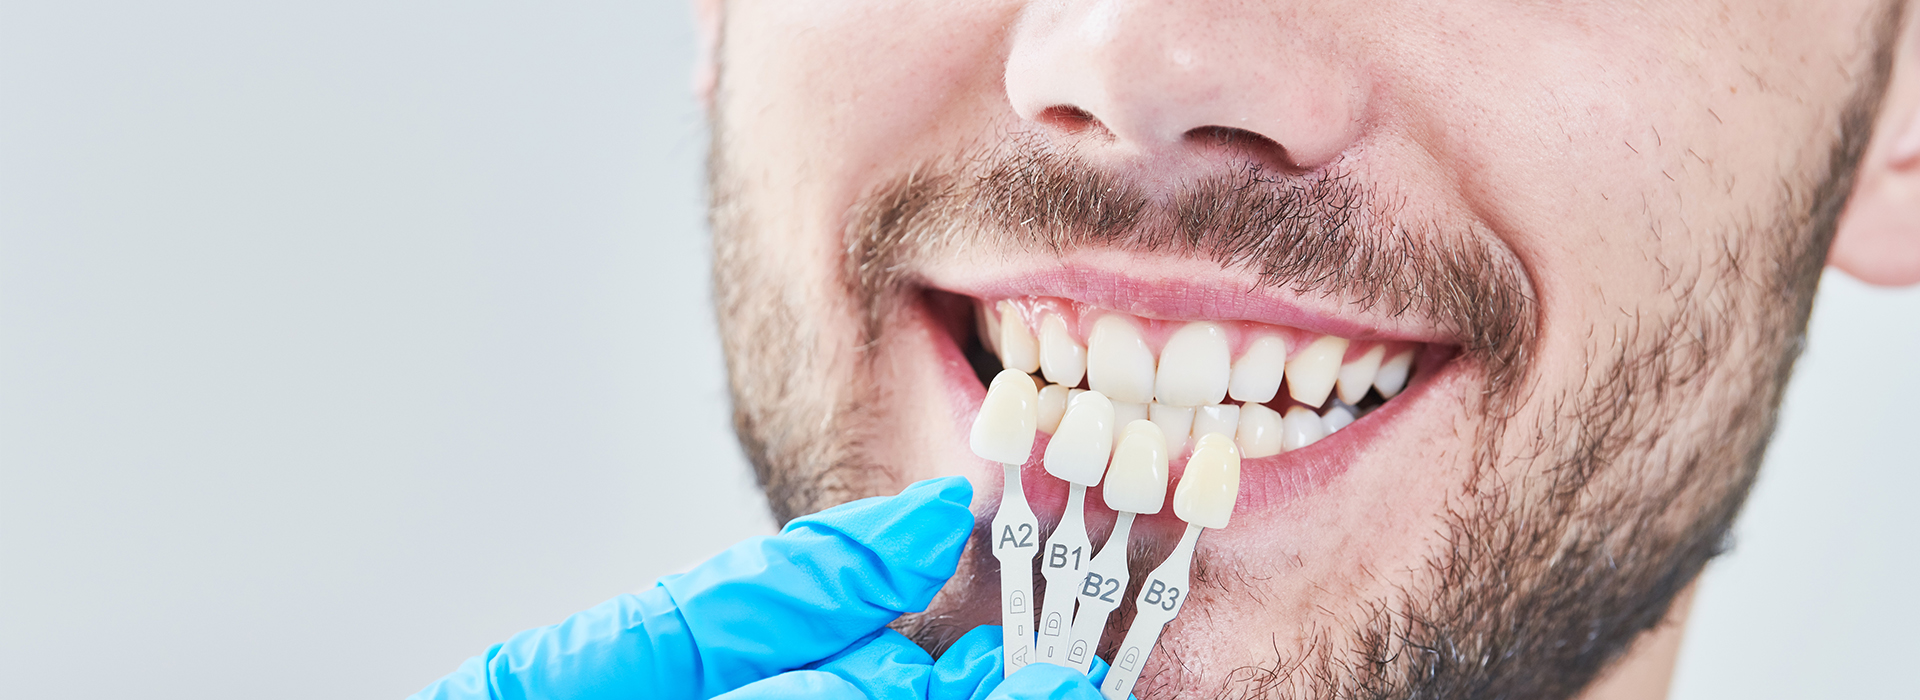 Appleseed Dental | Oral Exams, Dental Sealants and Teeth Whitening